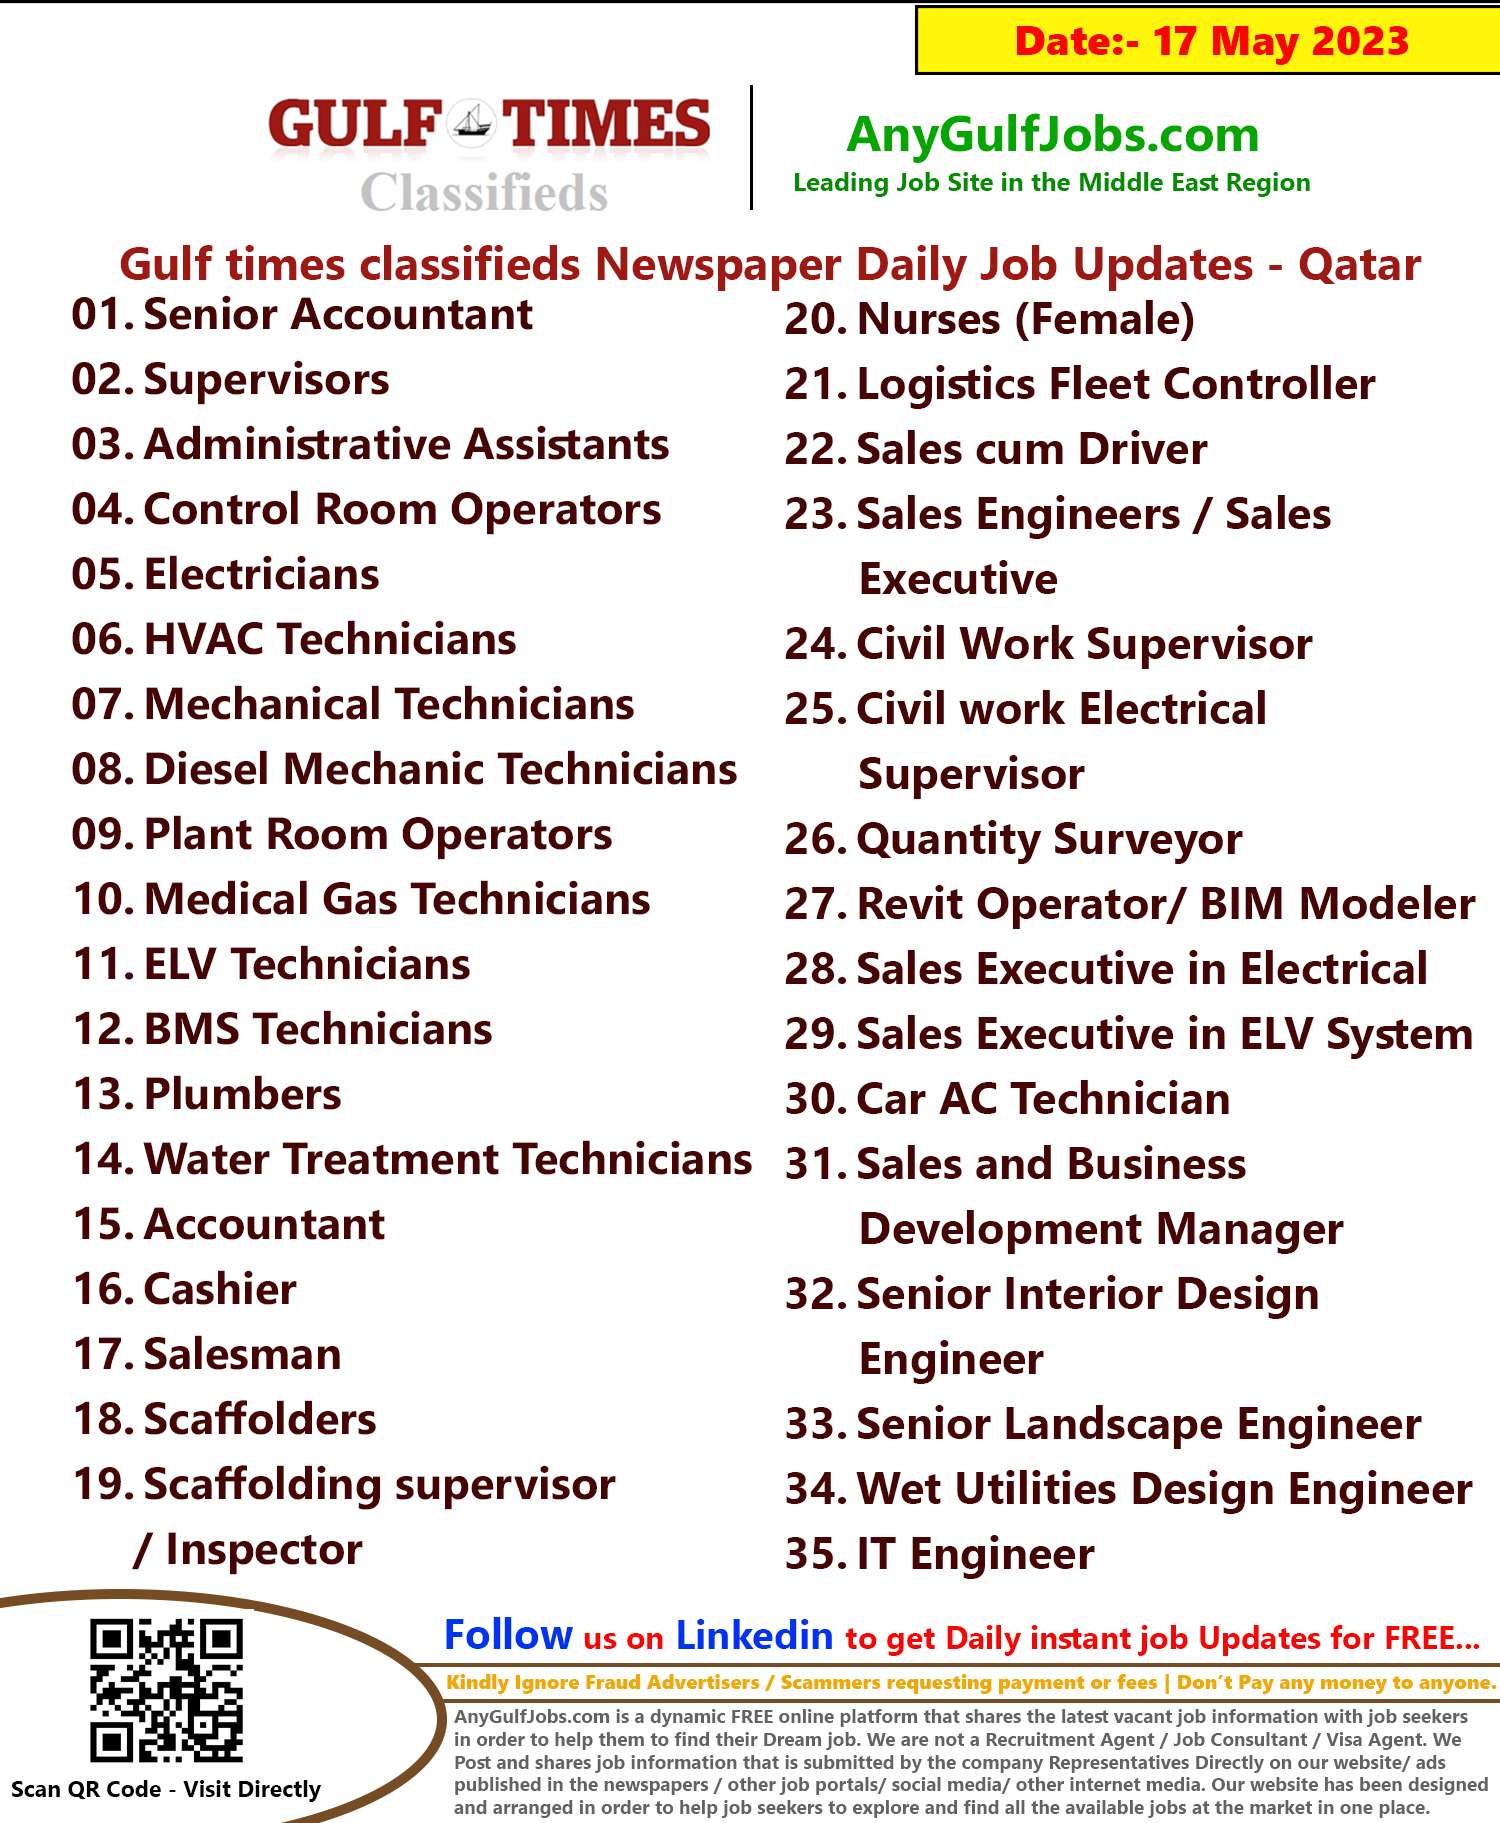 Gulf times classifieds Job Vacancies Qatar - 17 May 2023